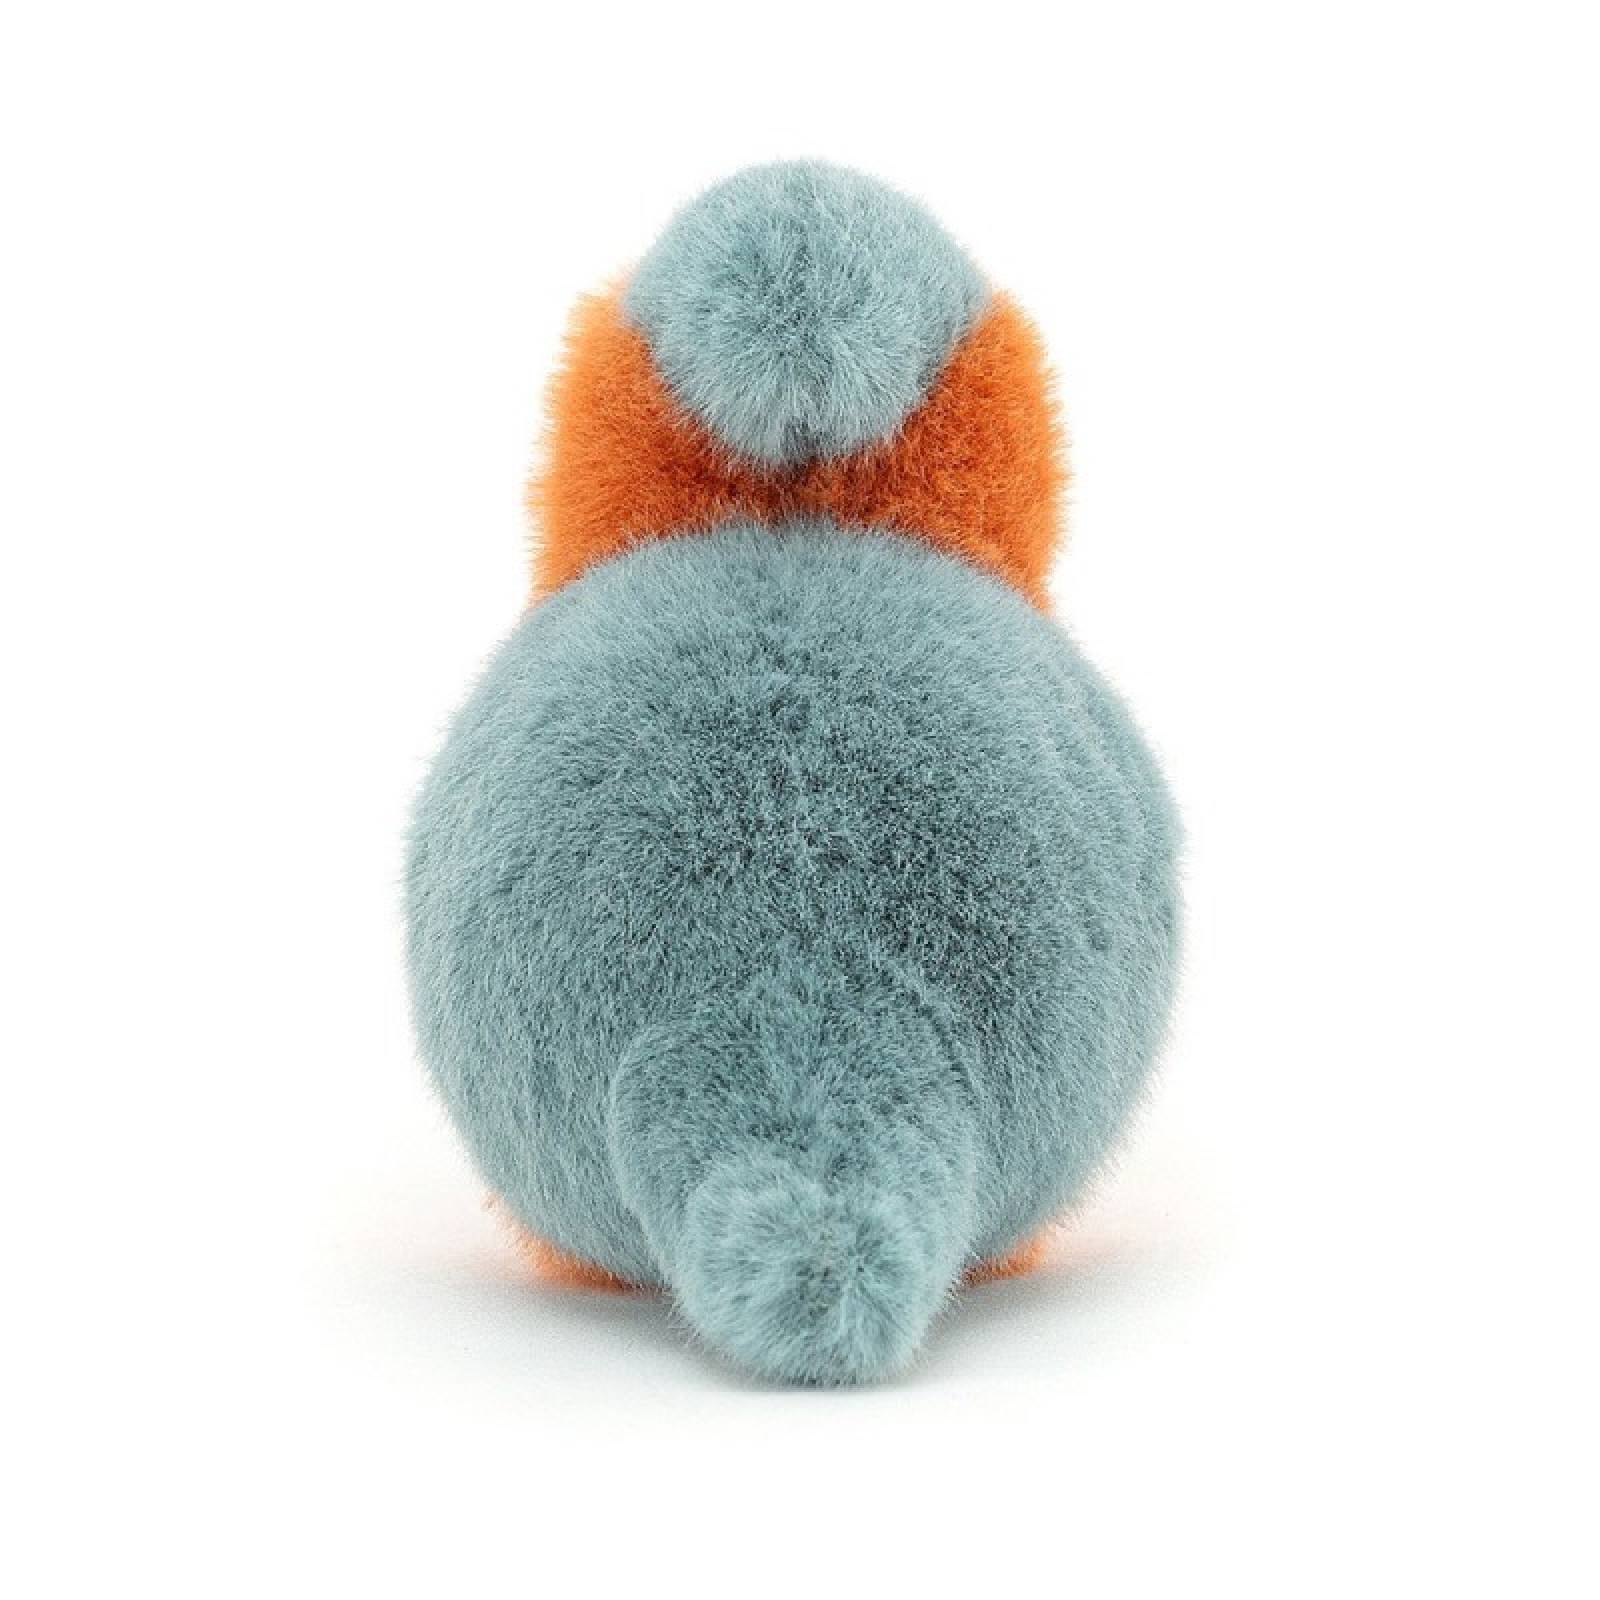 Birdling Kingfisher Bird Soft Toy By Jellycat thumbnails